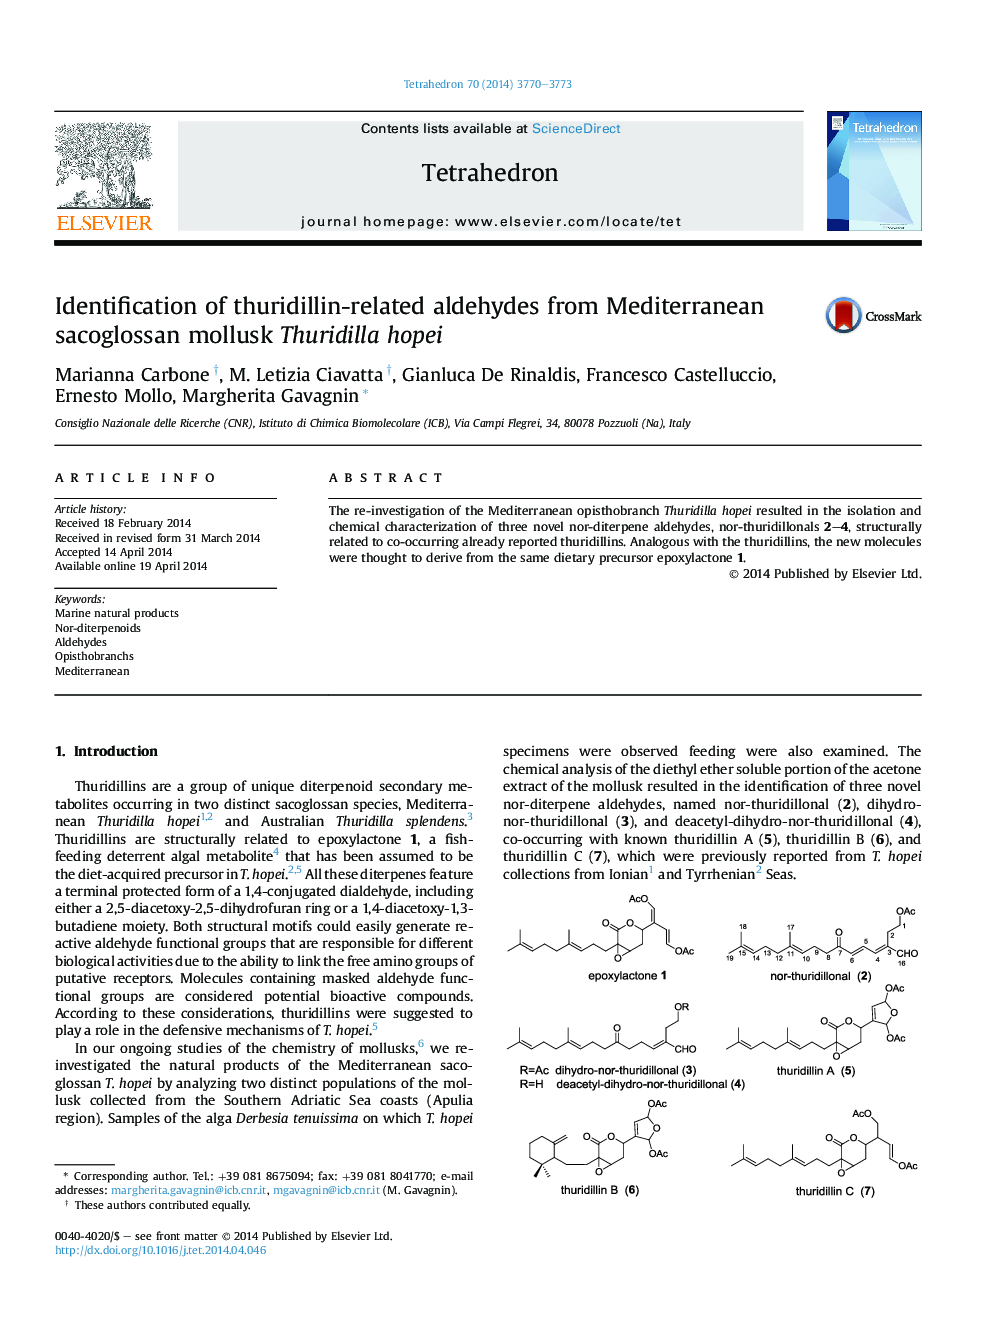 Identification of thuridillin-related aldehydes from Mediterranean sacoglossan mollusk Thuridilla hopei